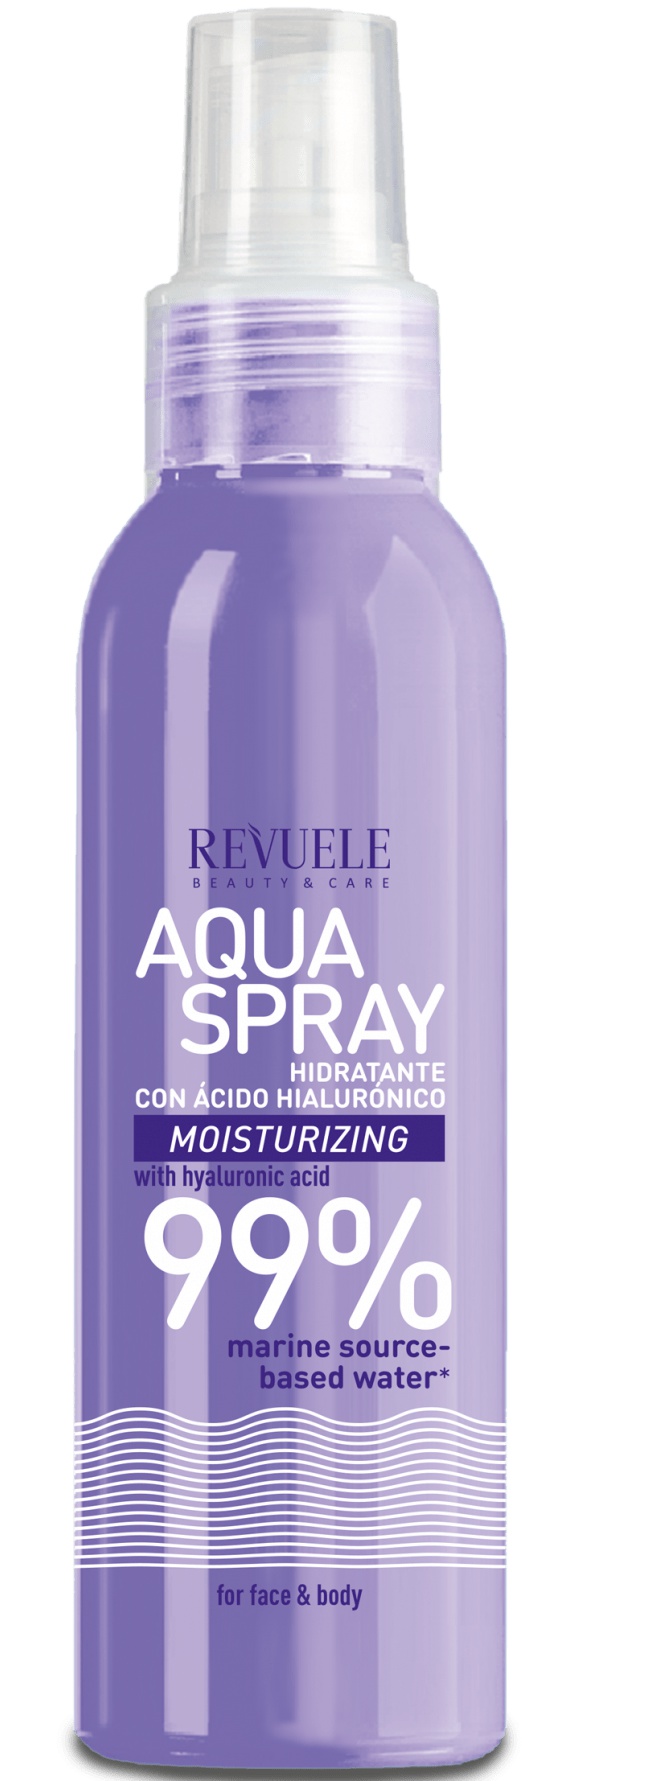 Revuele Aqua Spray Moisturizing